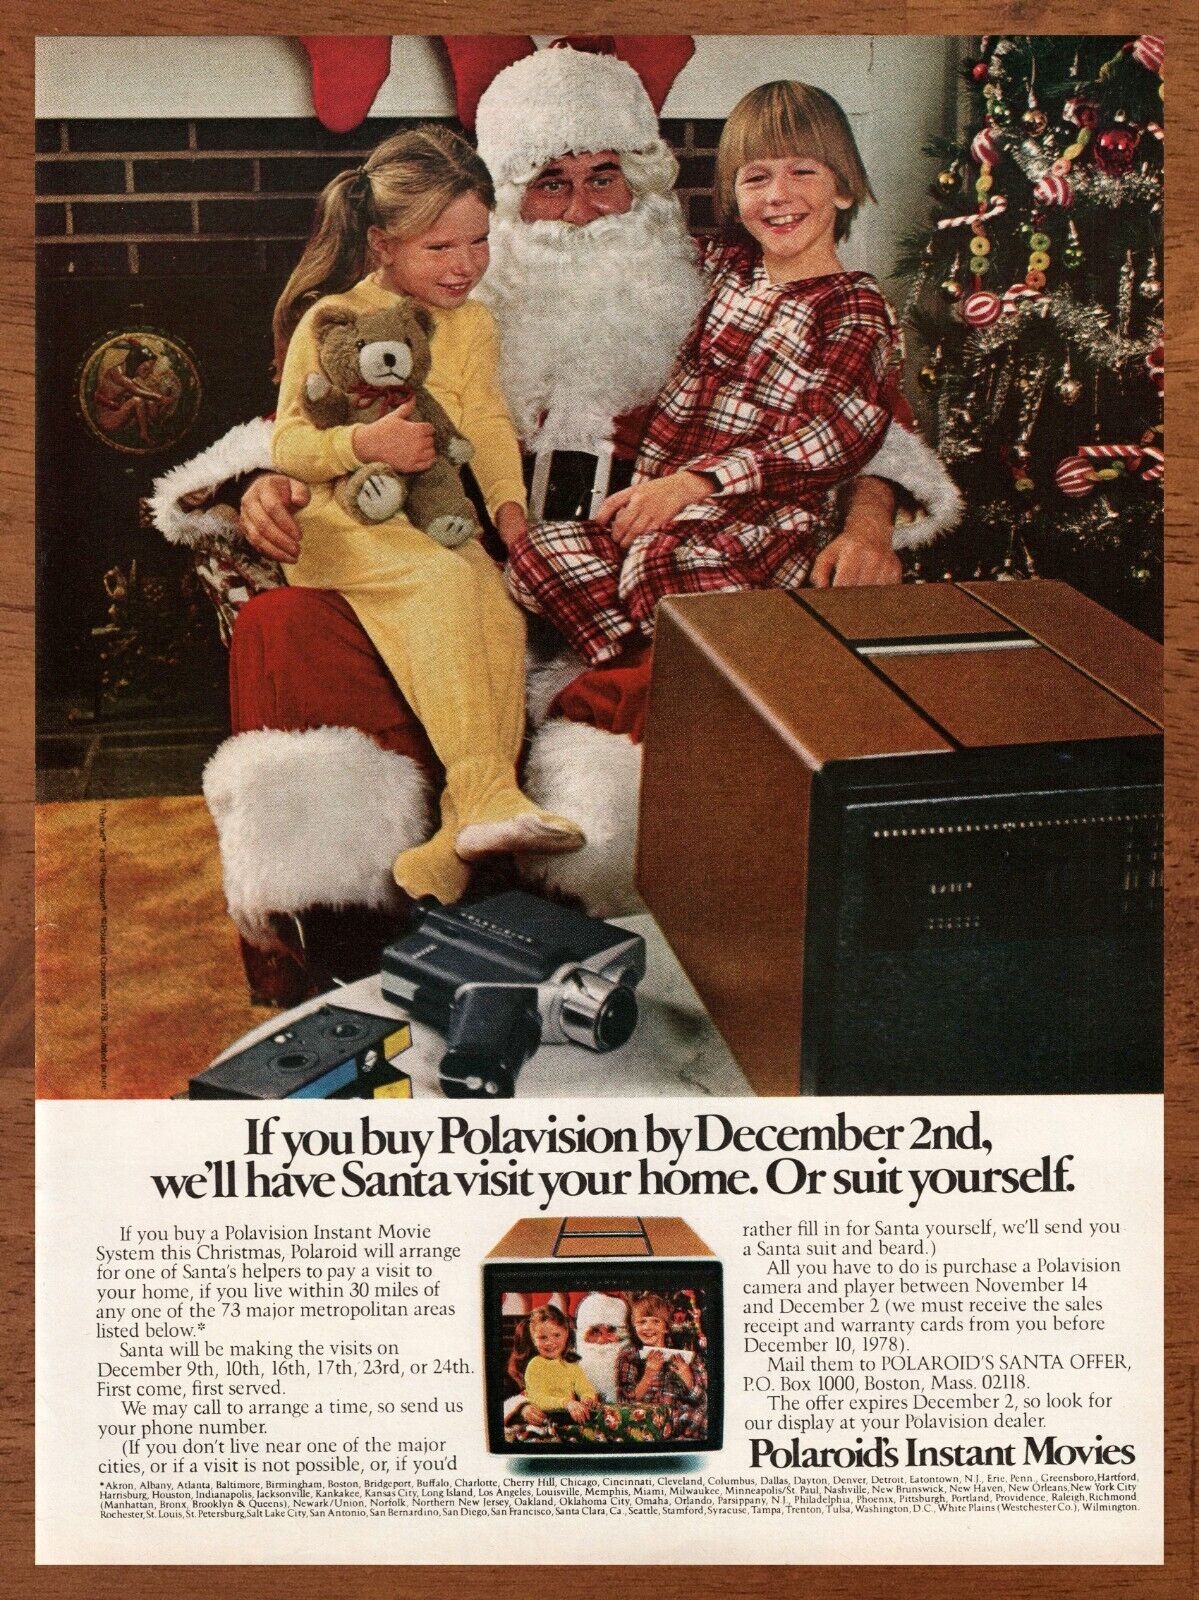 1978 Polaroid Instant Movies Vintage Print Ad/Poster 70s Christmas Santa Pop Art